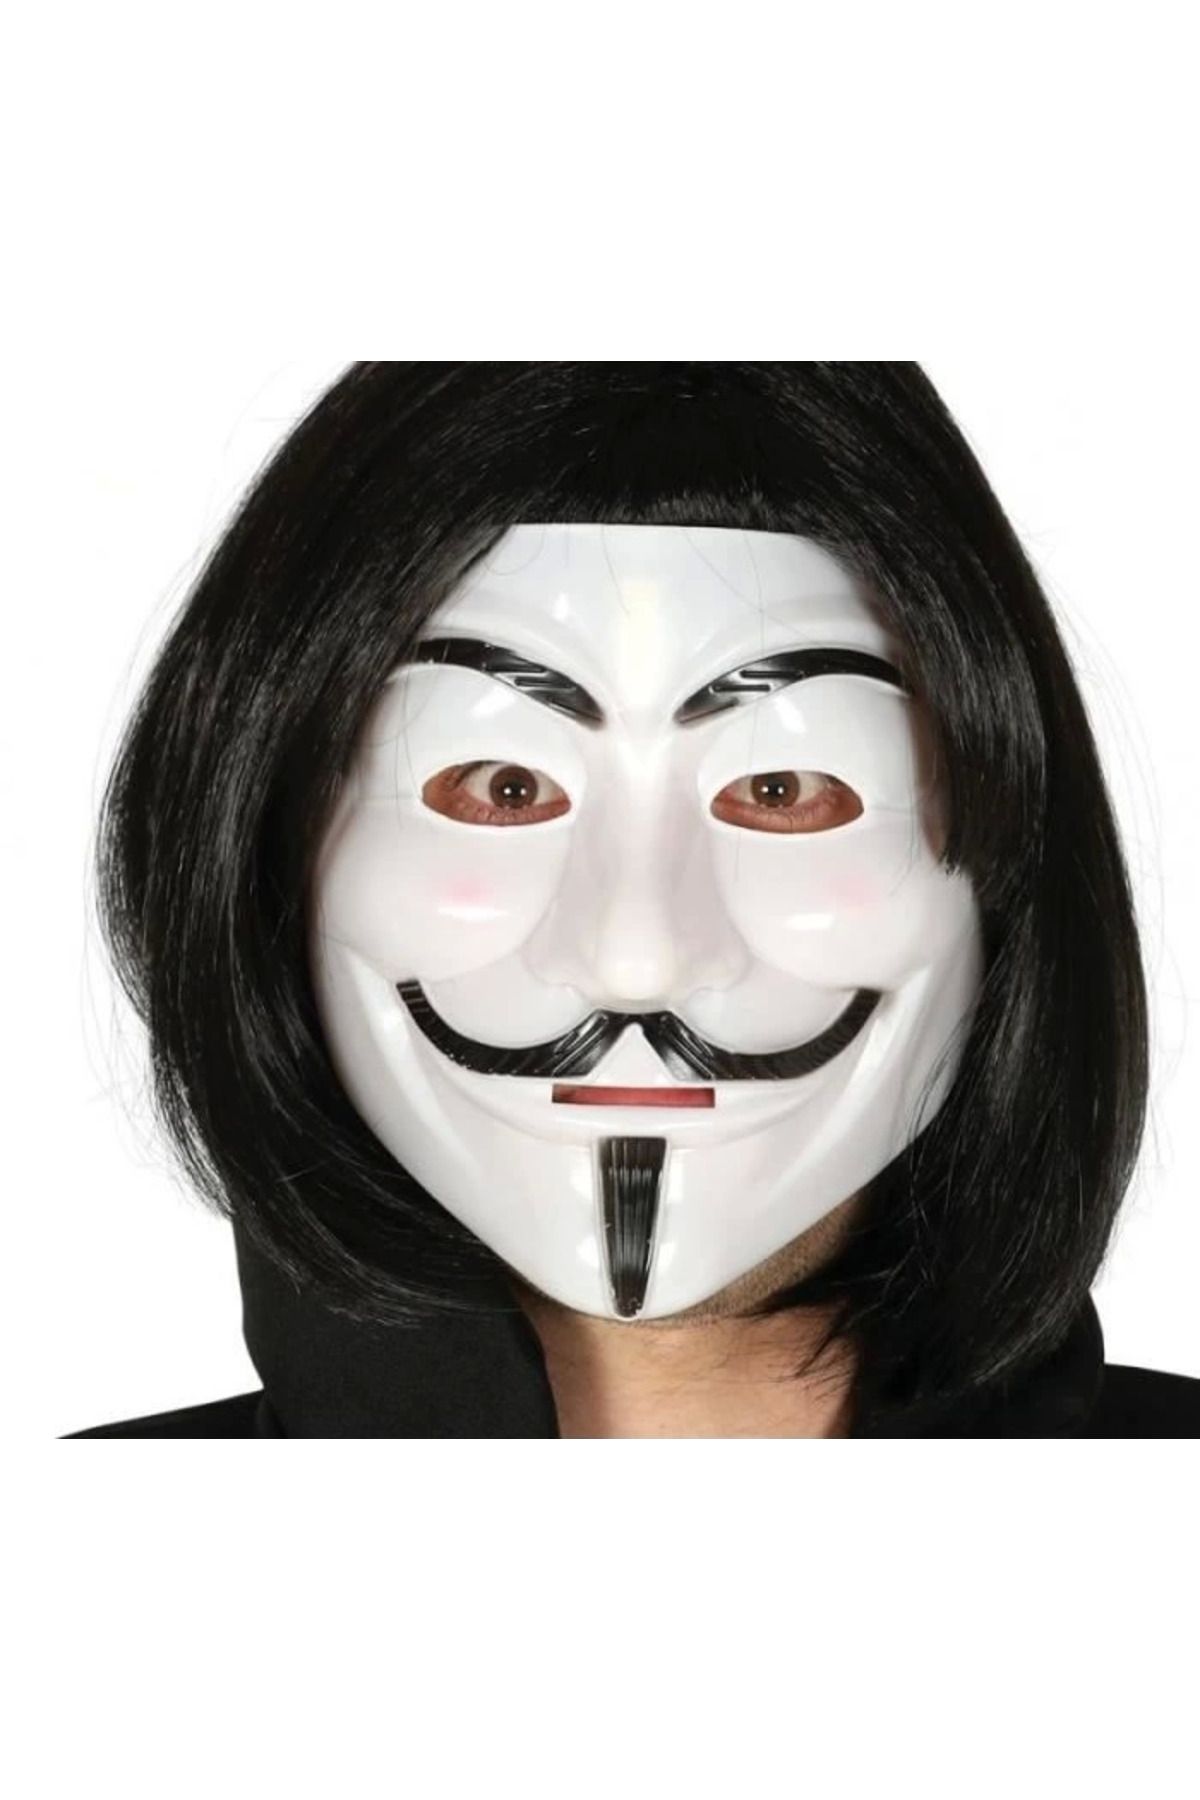 evibe Siyah Renk Takma Kısa Saç Ve V For Vendetta Maskesi Anonymous Maskesi